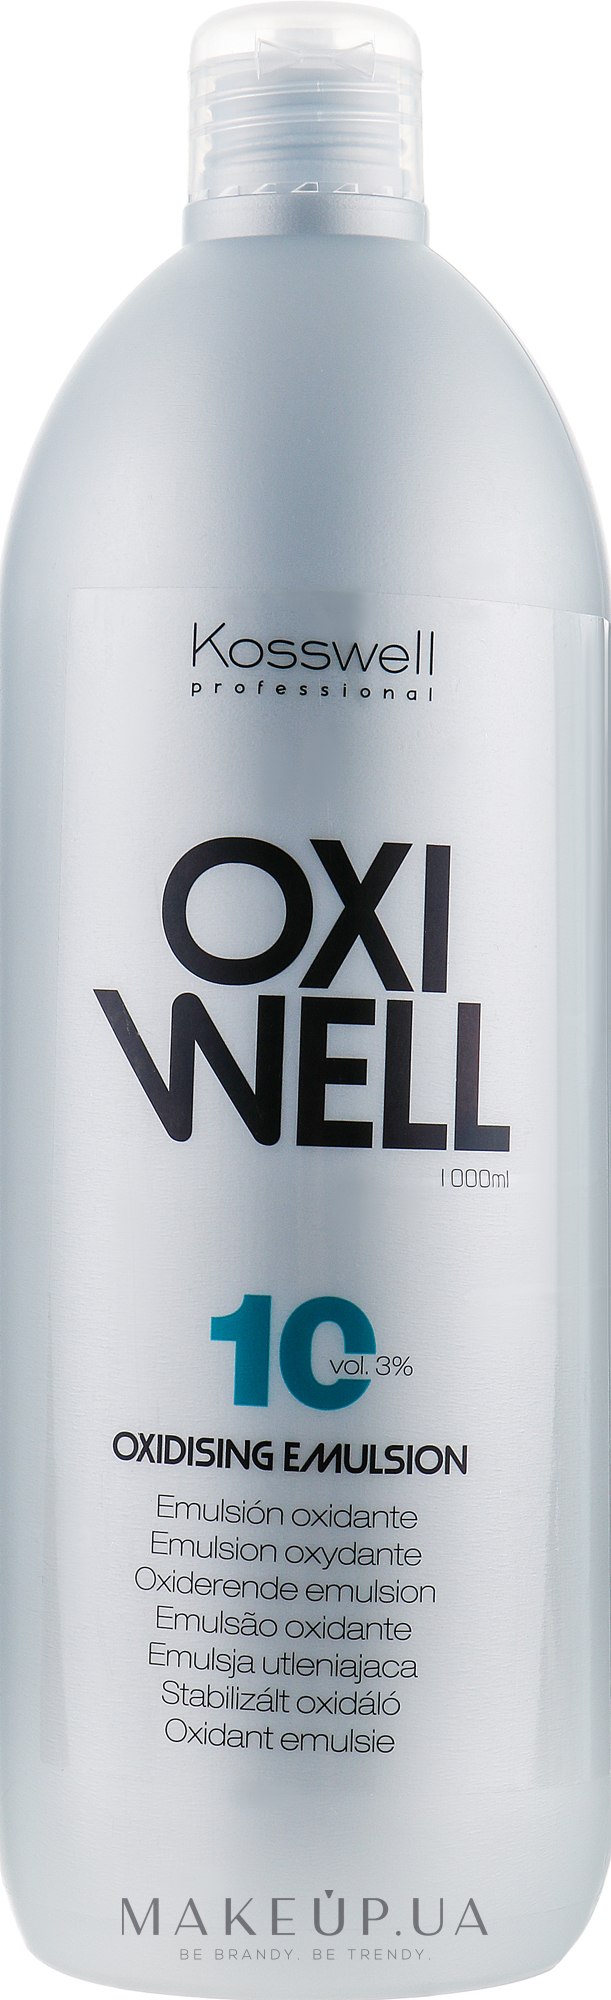 Окислительная эмульсия, 3% - Kosswell Professional Equium Oxidizing Emulsion Oxiwell 3% 10vol — фото 1000ml